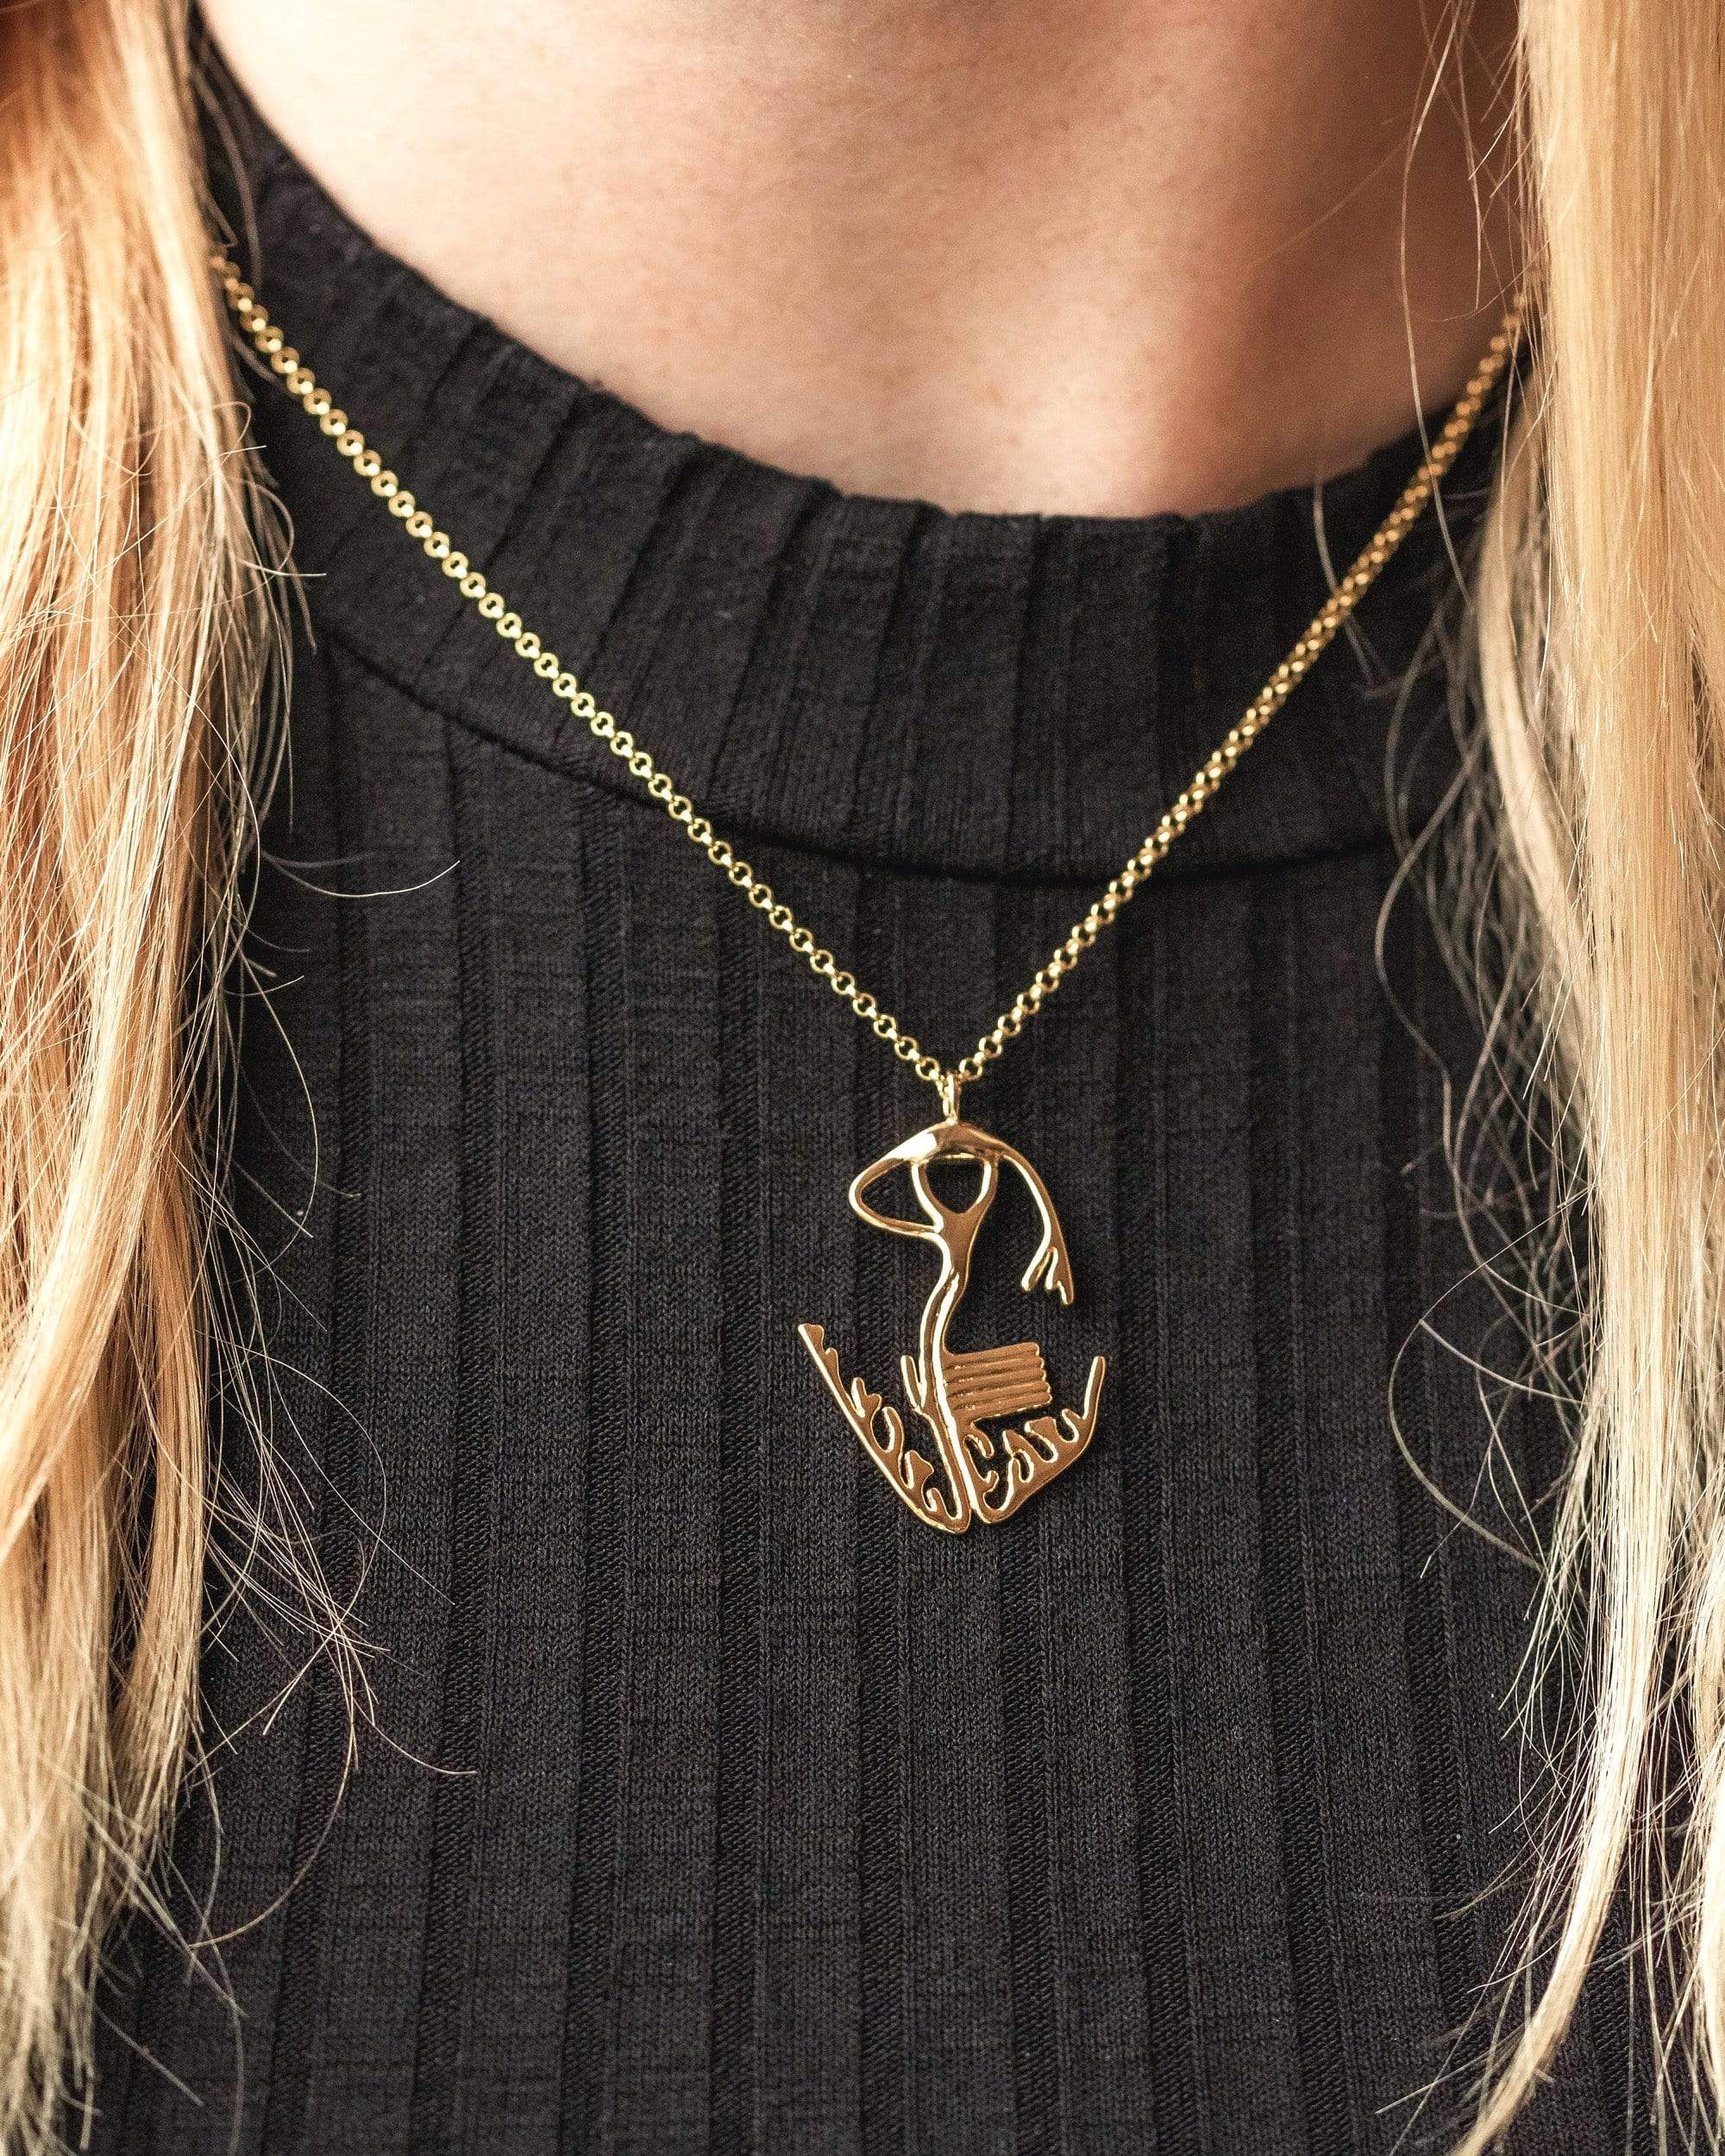 cardiac conduction system necklace | gold vermeil